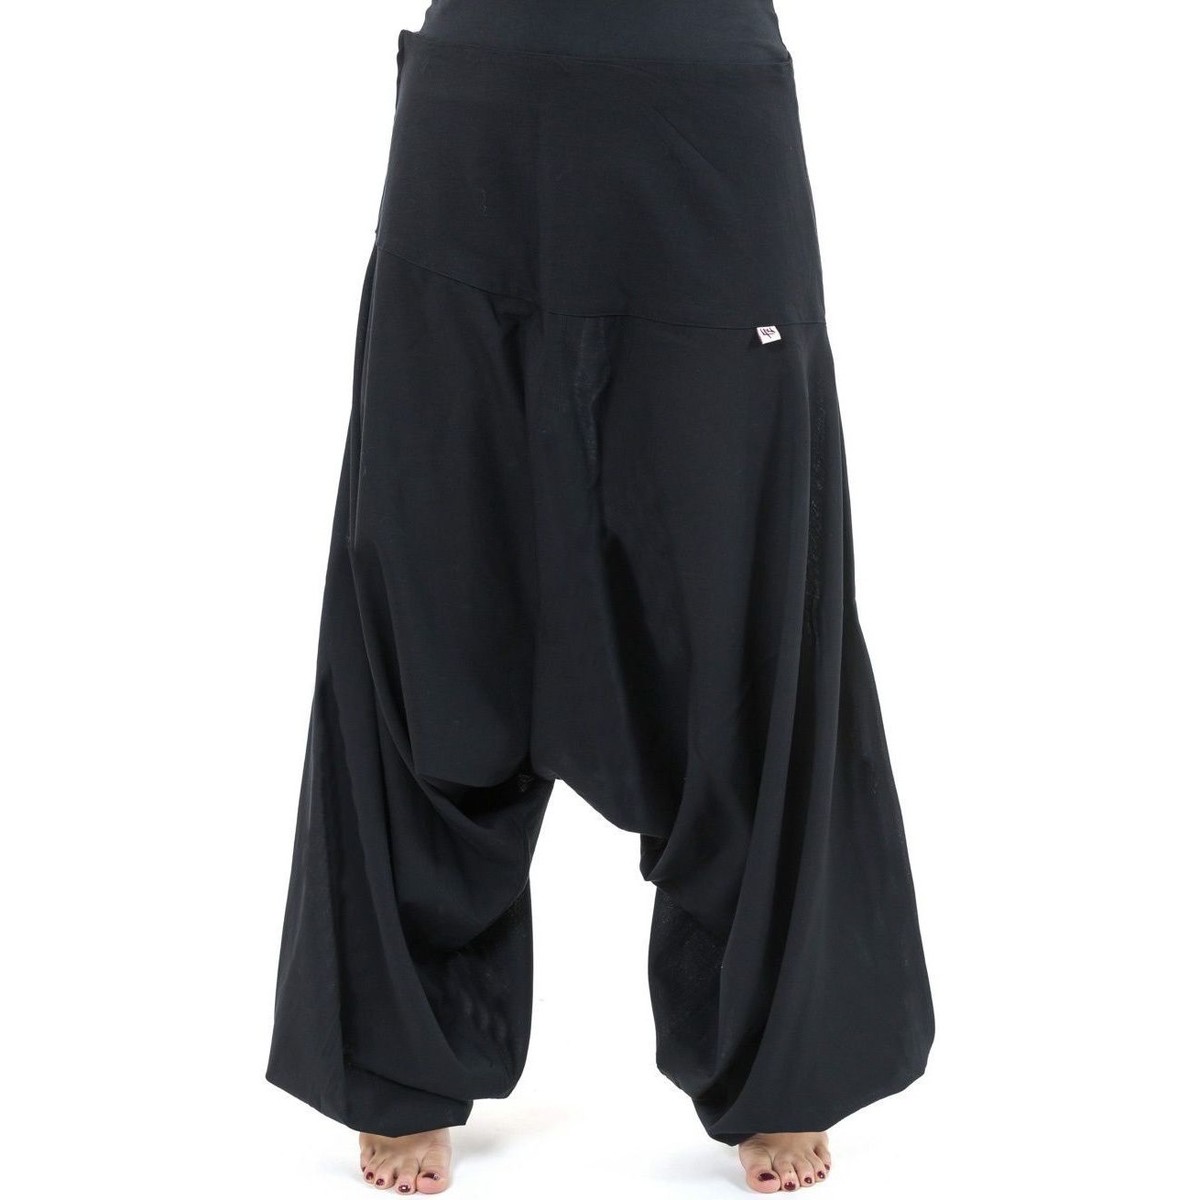 Vêtements Pantalons fluides / Sarouels Fantazia Pantalon sarouel bali coton nepalais aladin sarwel Noir